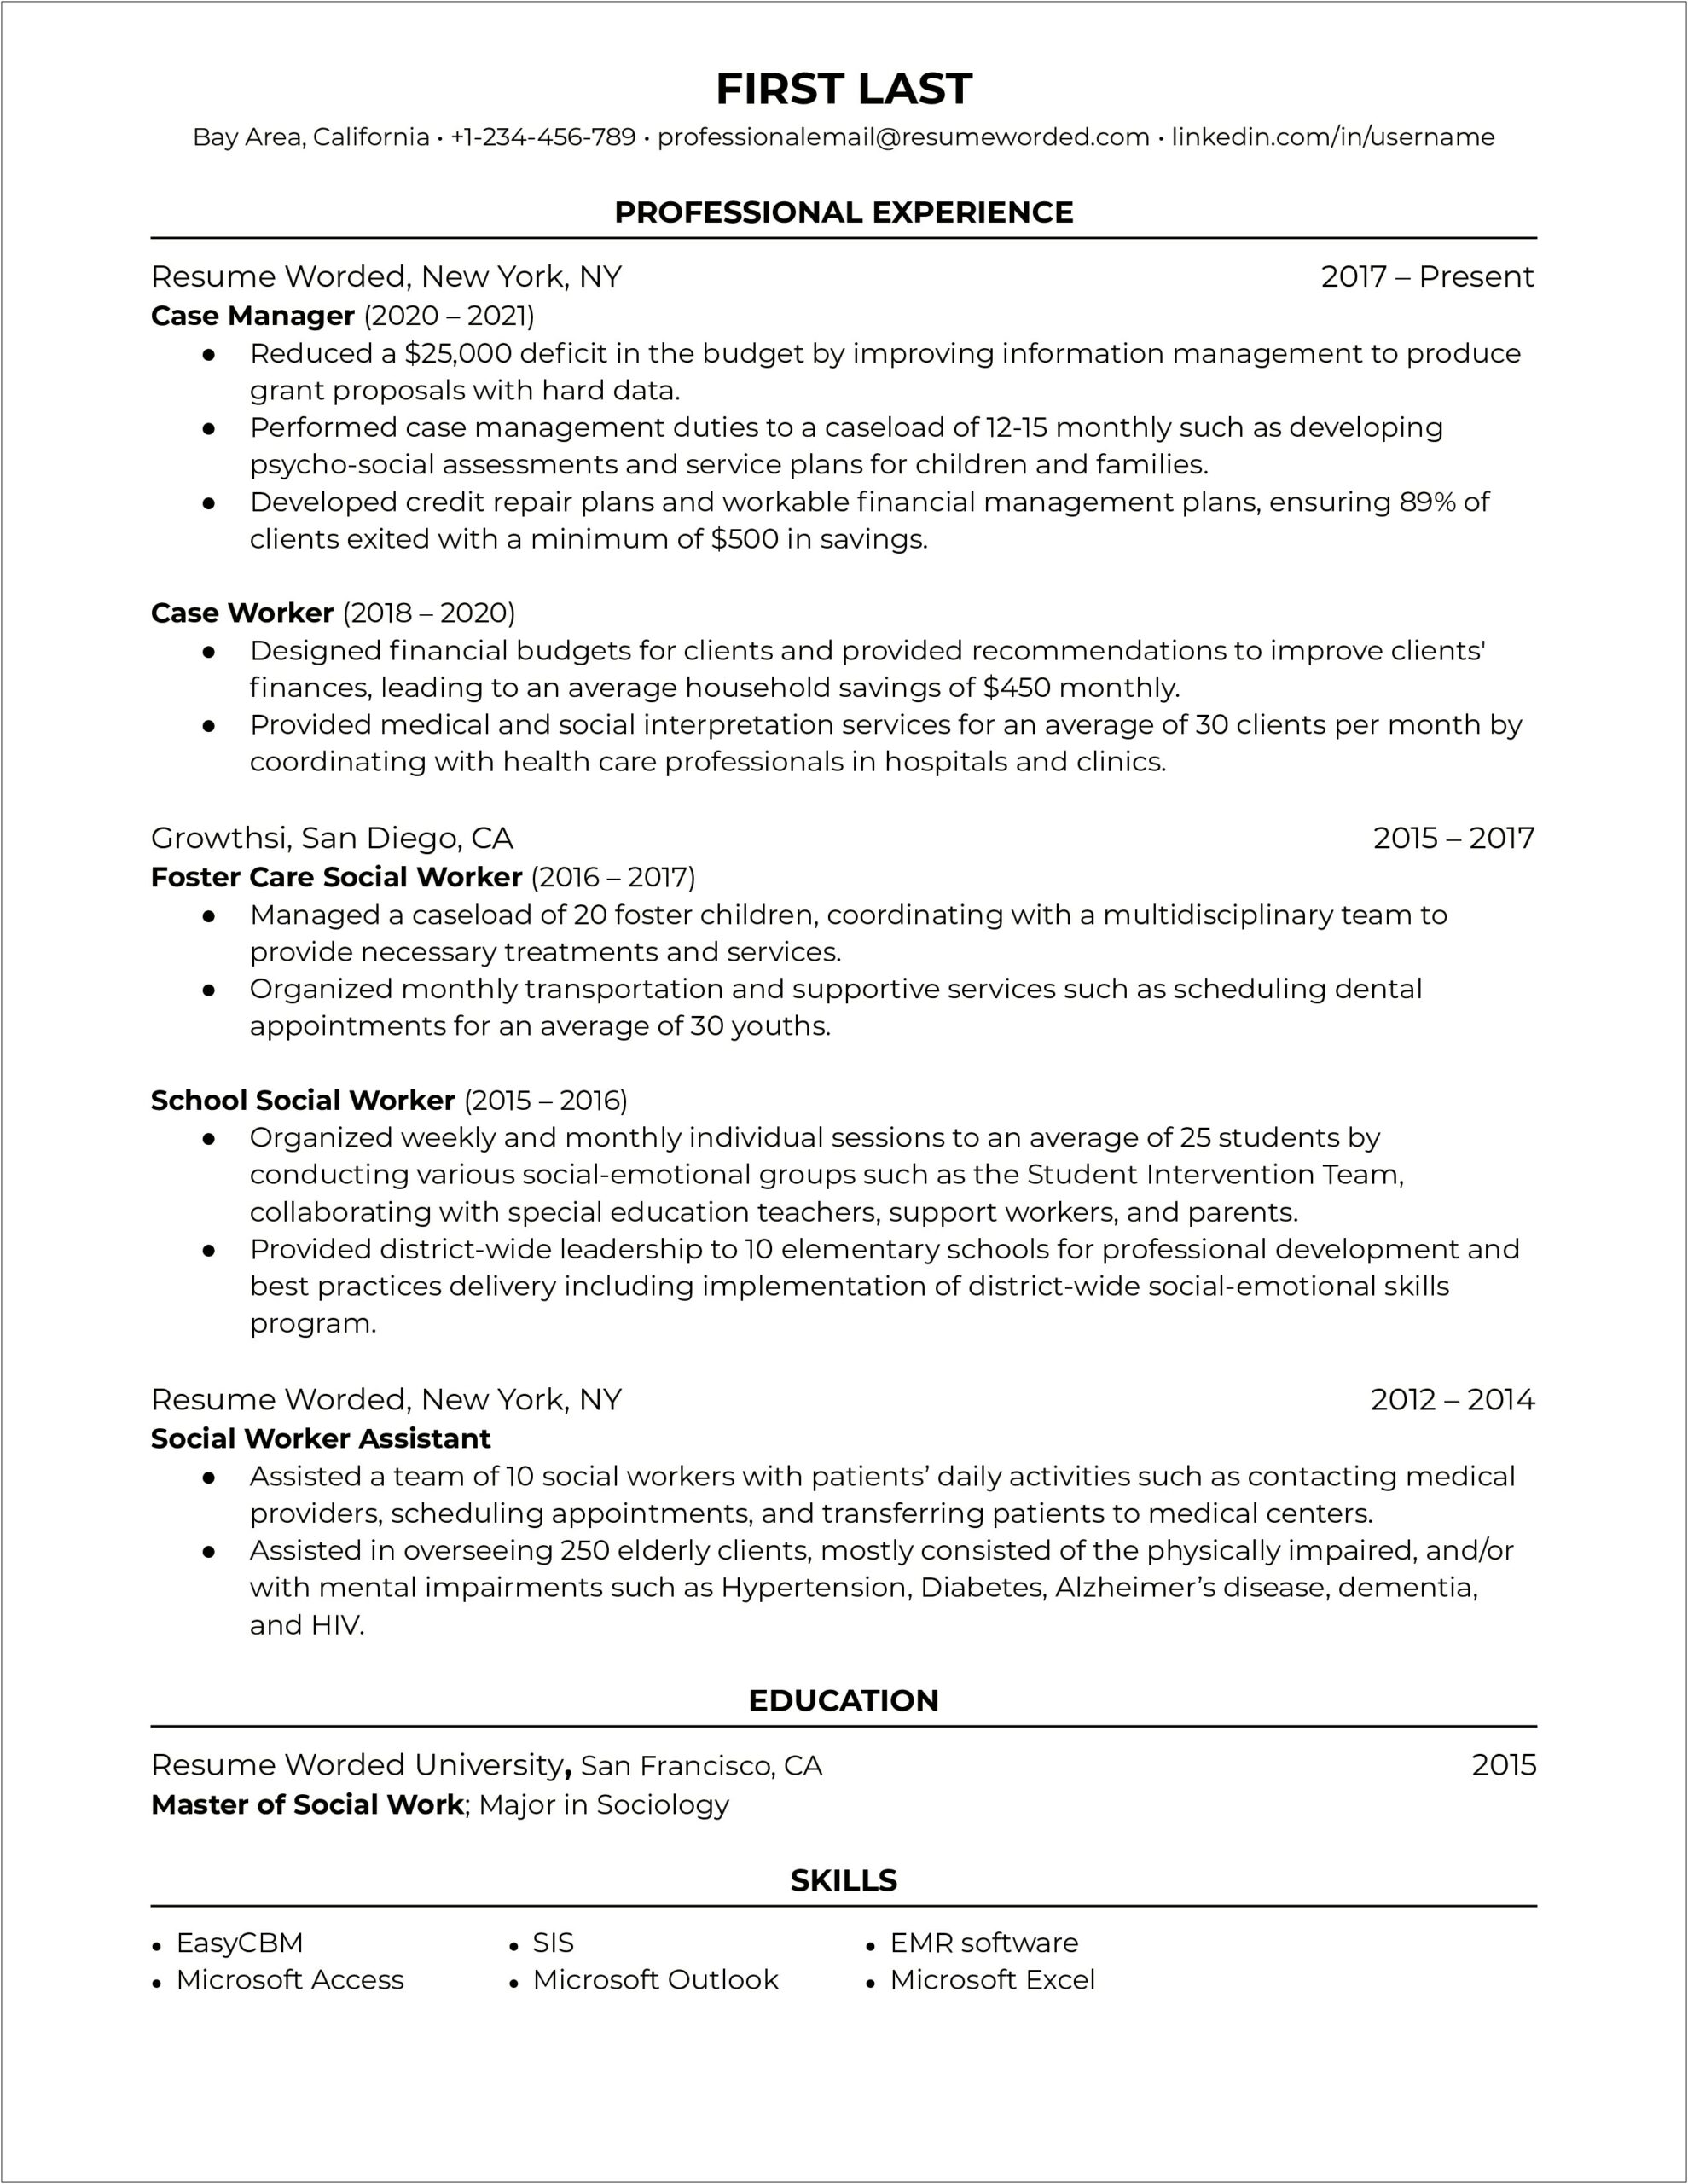 Credit Repair Specialist Job Description For Resume